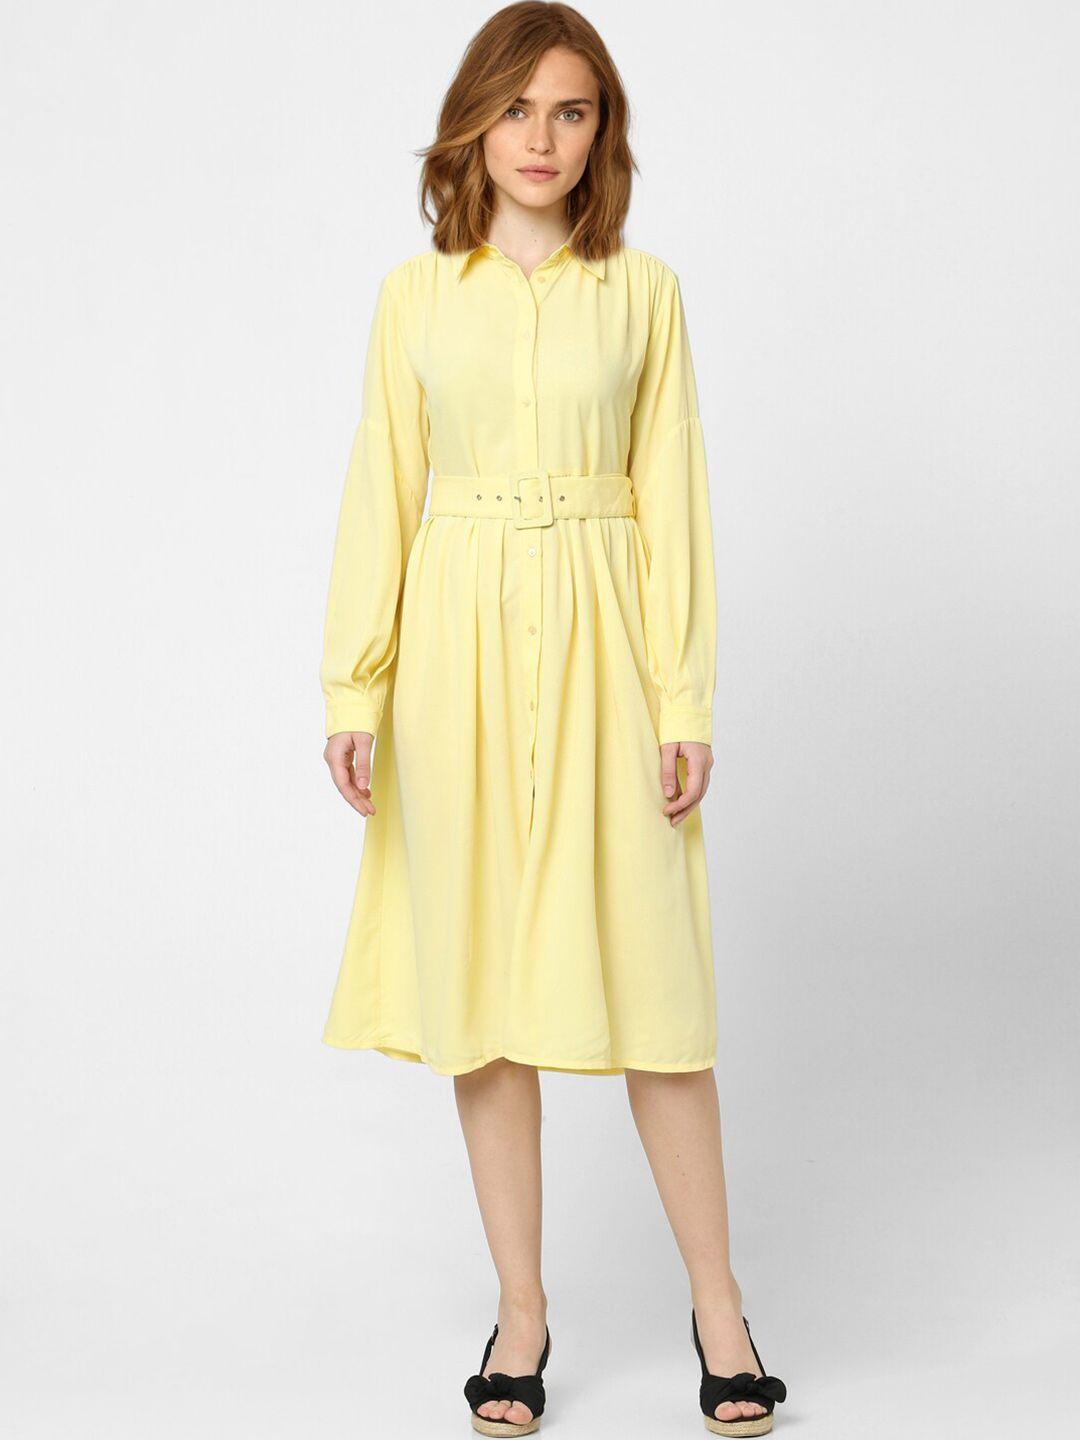 vero moda yellow midi dress